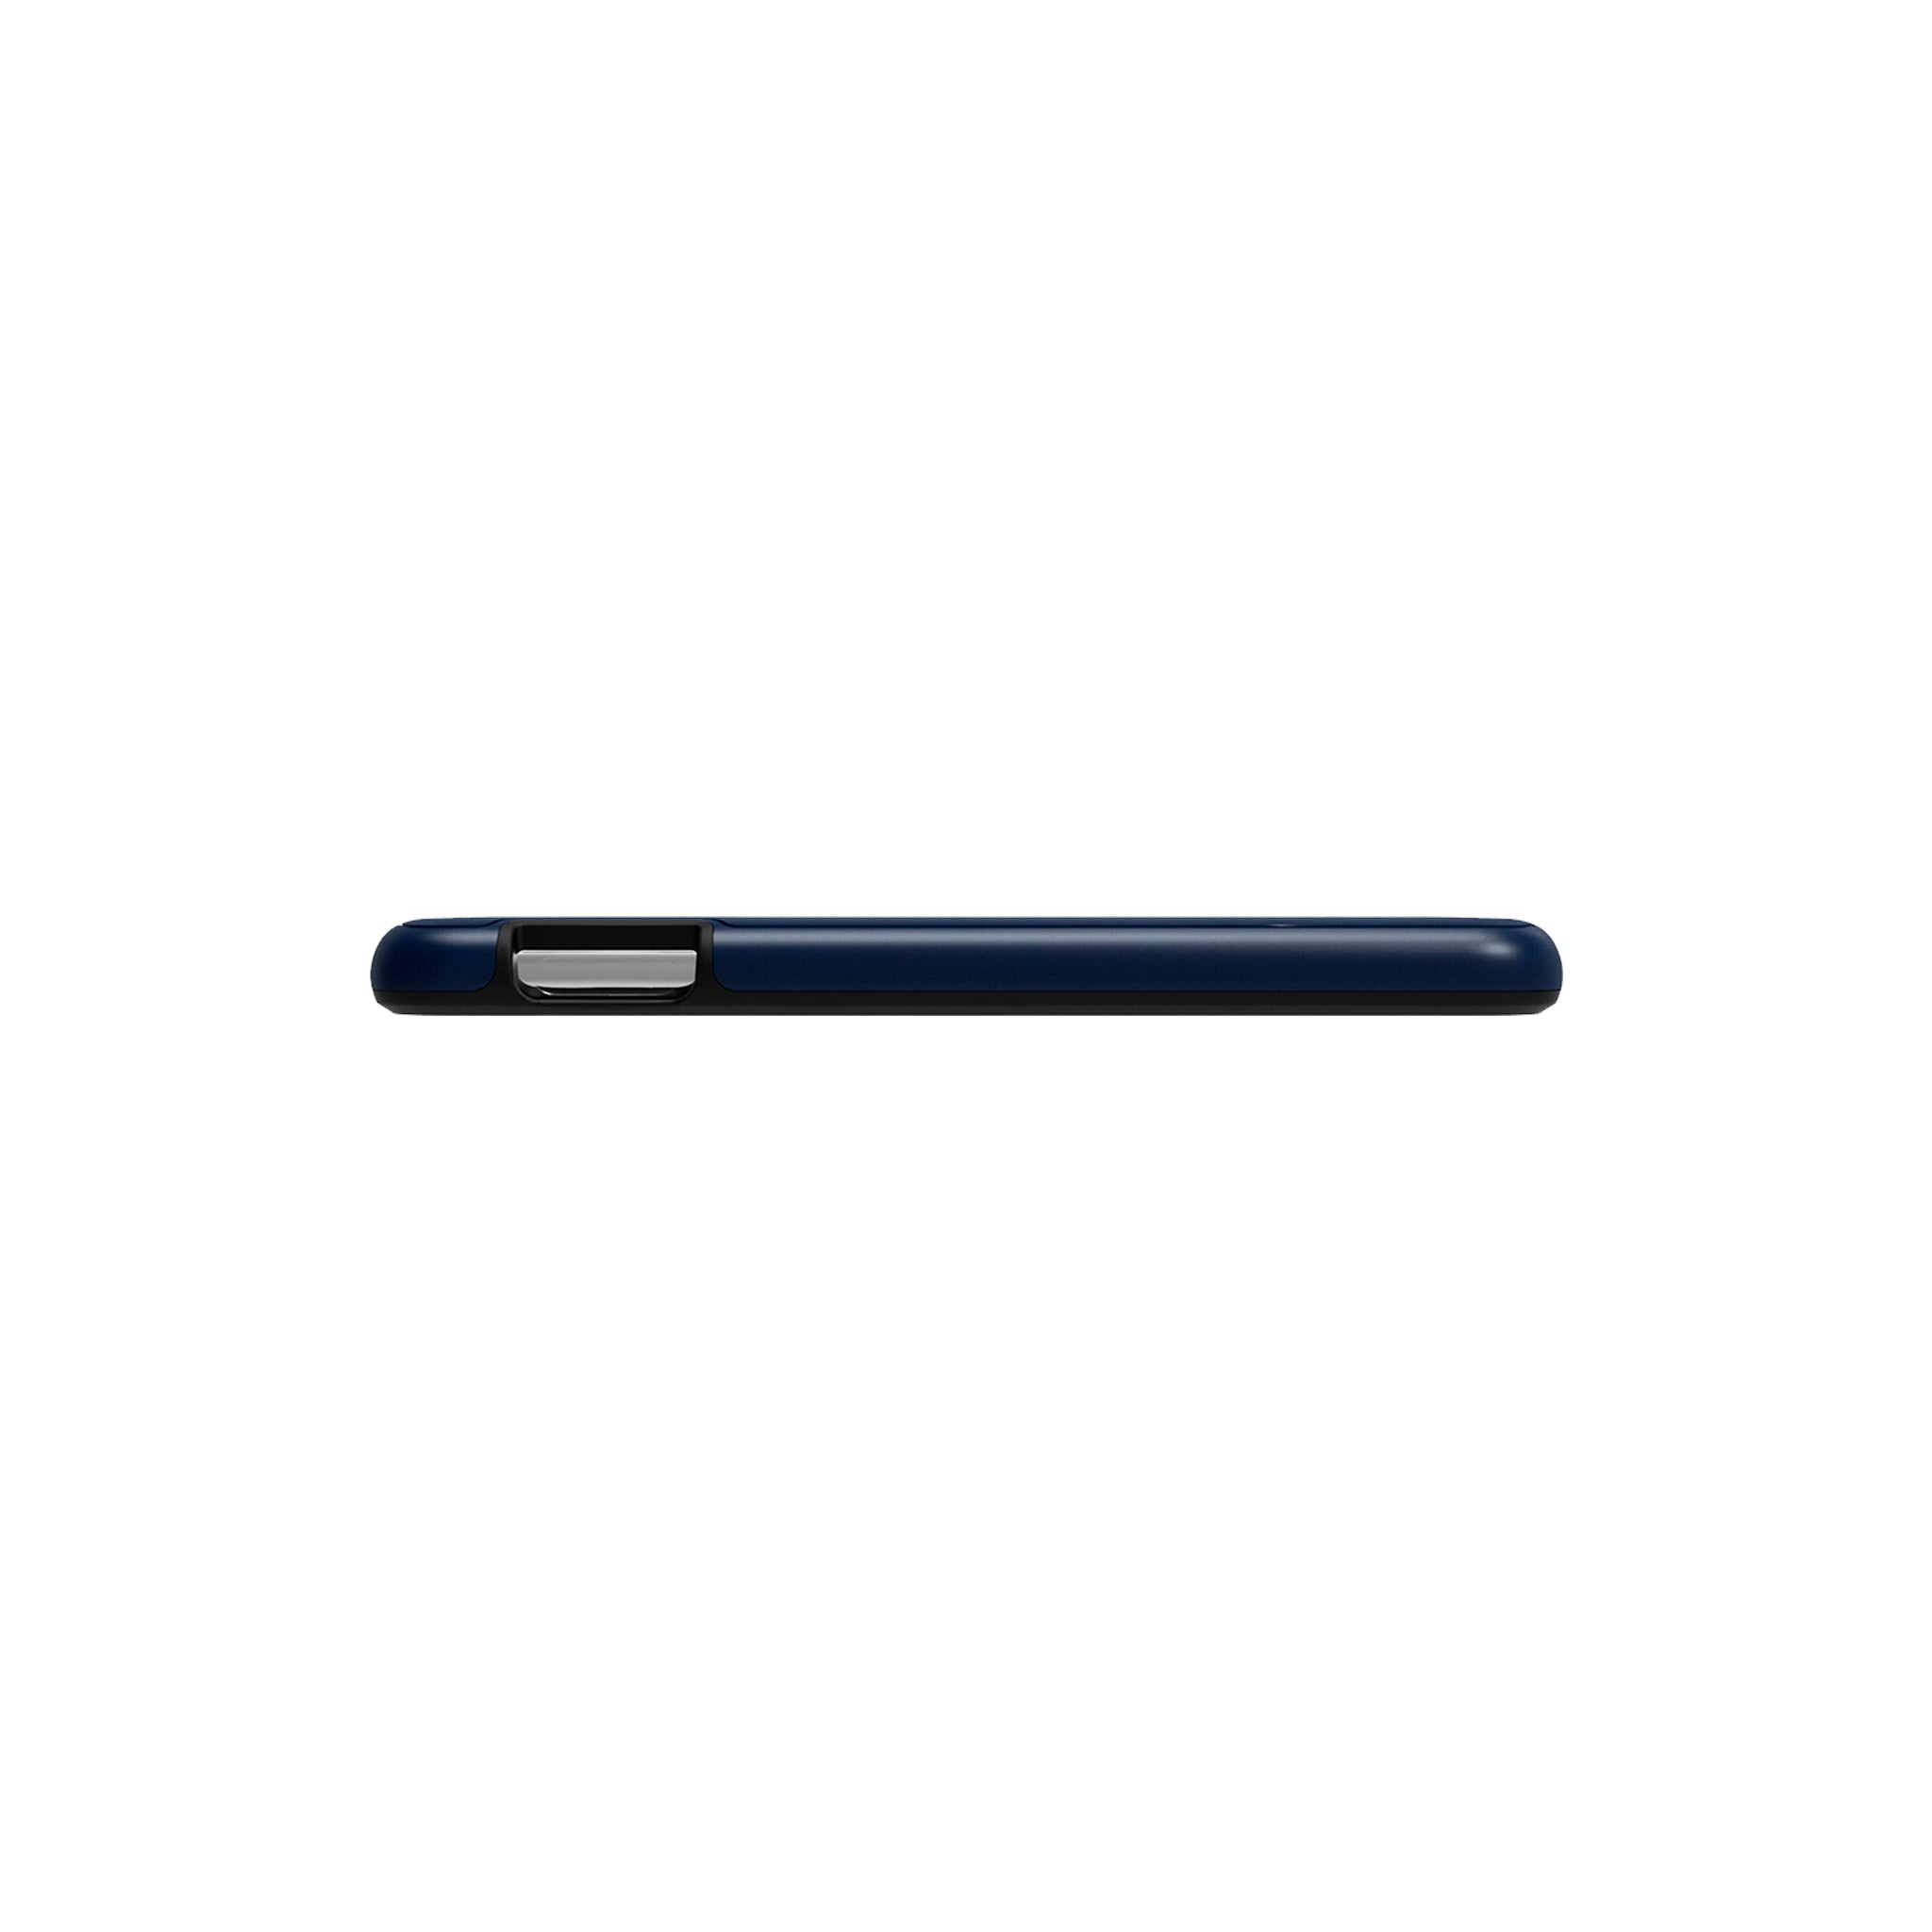 Nimbus9 - Cirrus 2 Case For Samsung Galaxy S10e - Midnight Blue